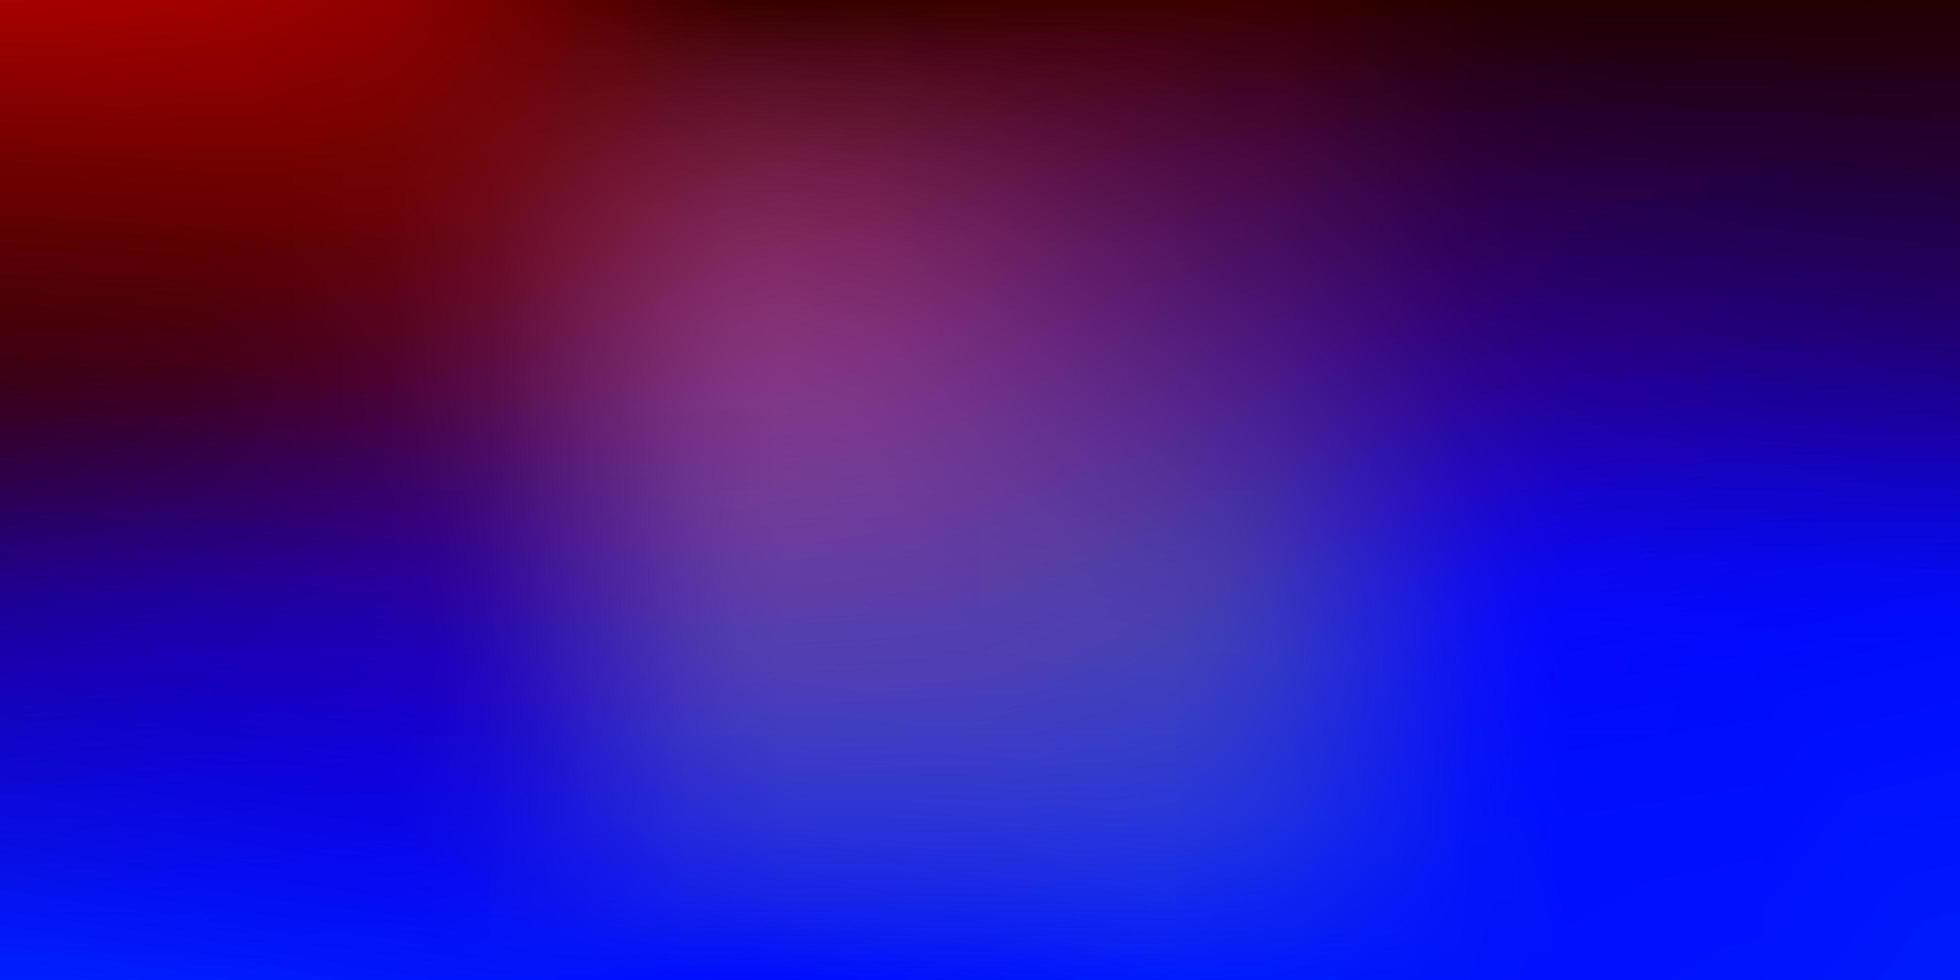 Dark Blue Red vector abstract blur texture